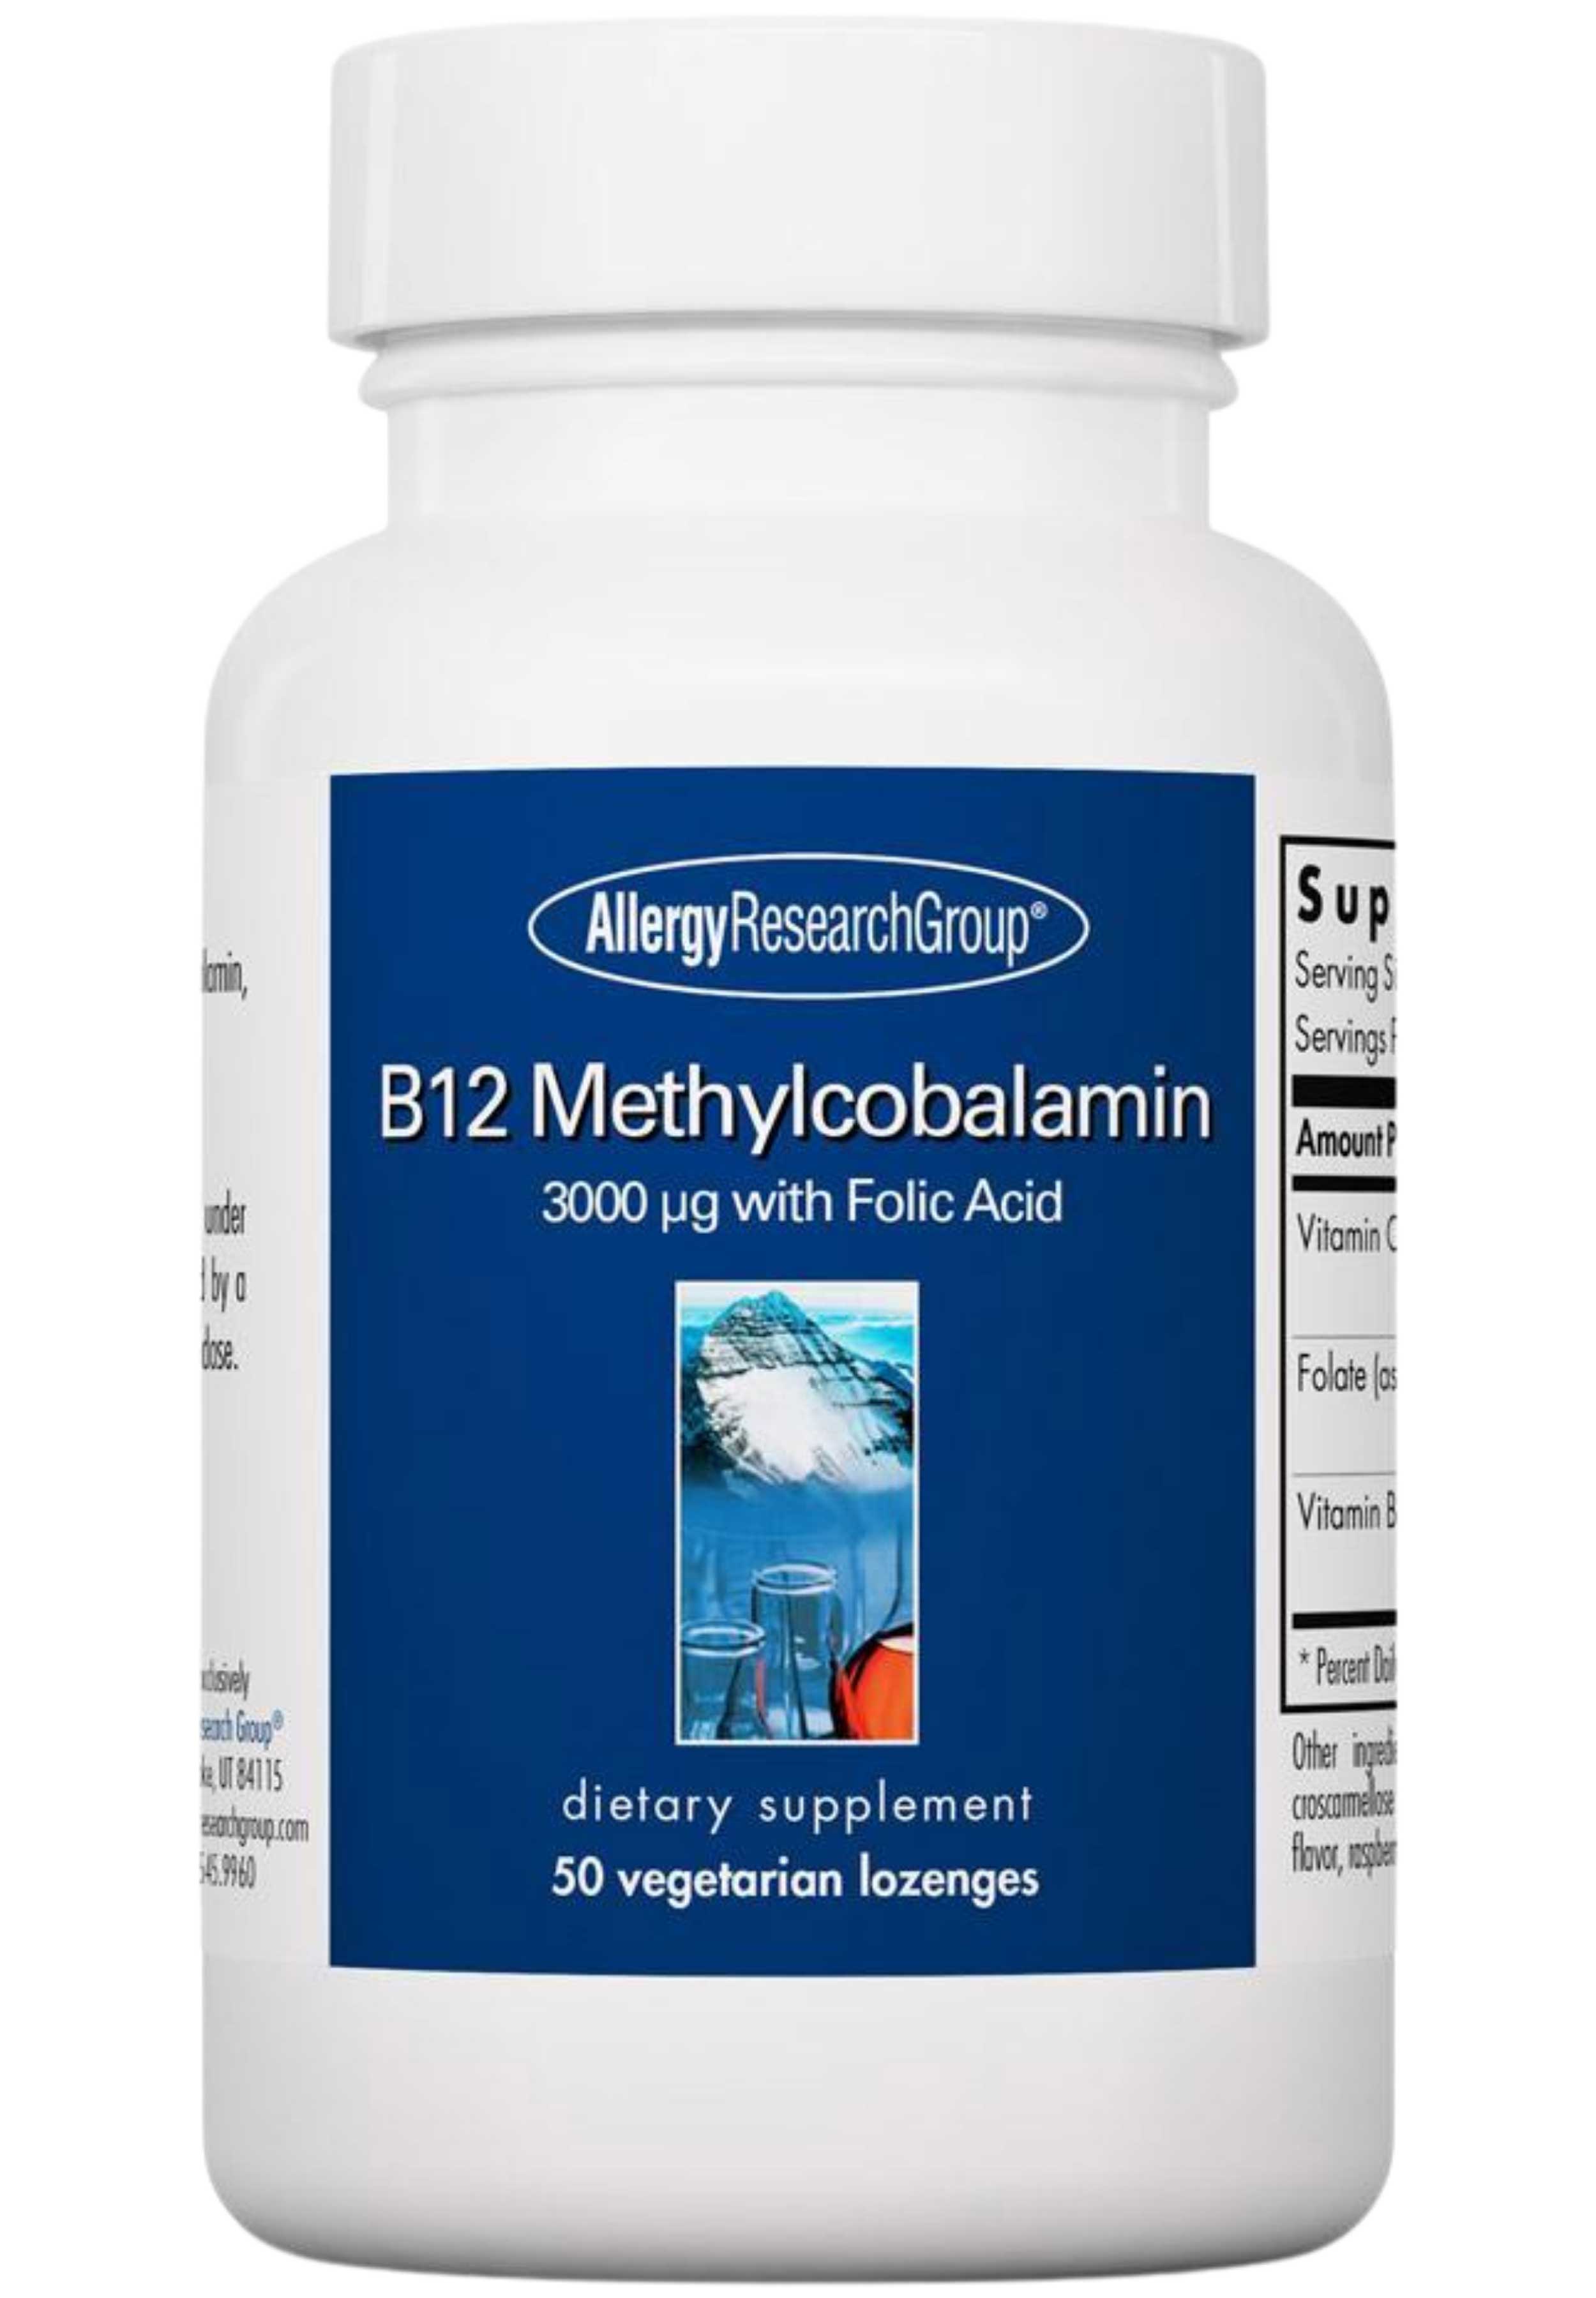 Allergy Research Group B12 Methylcobalamin